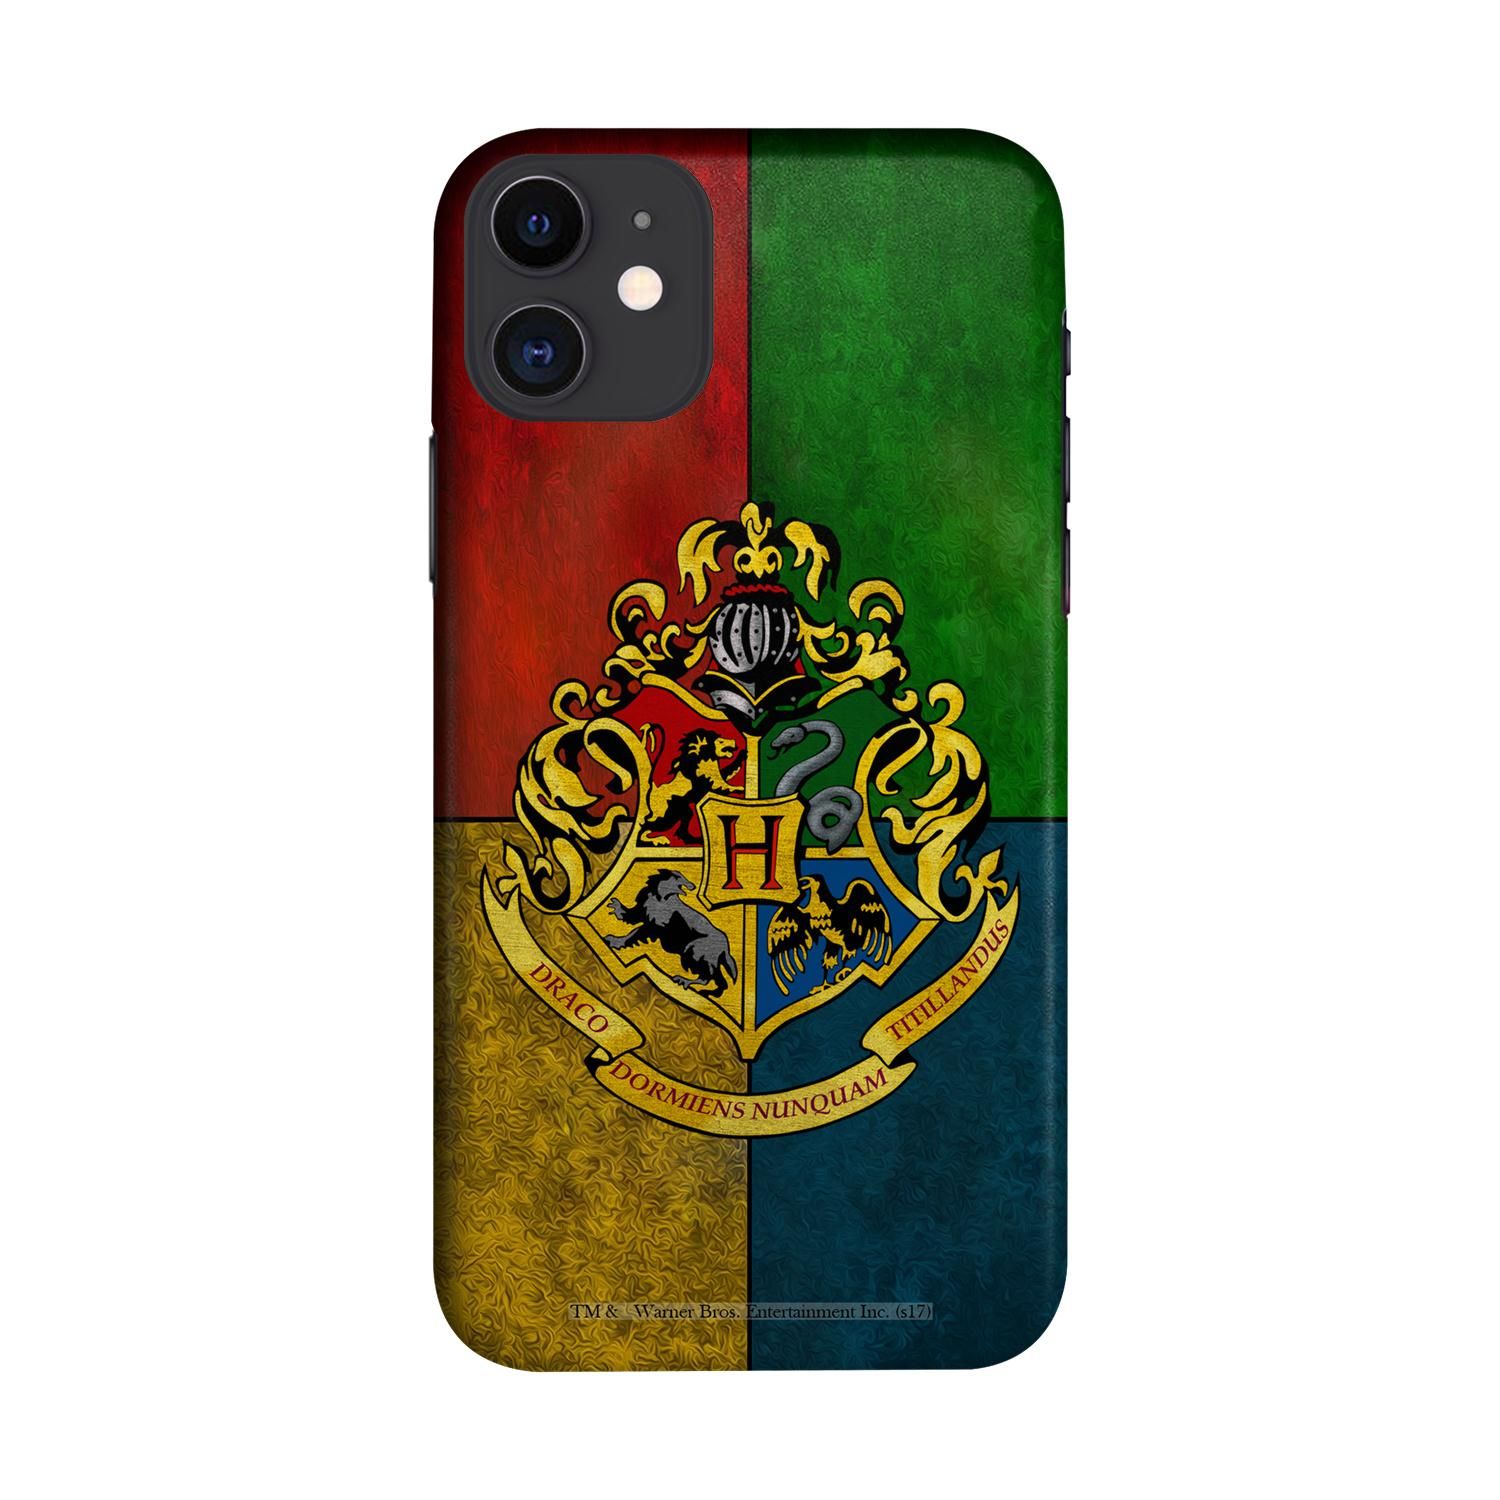 Buy Hogwarts Sigil - Sleek Phone Case for iPhone 11 Online